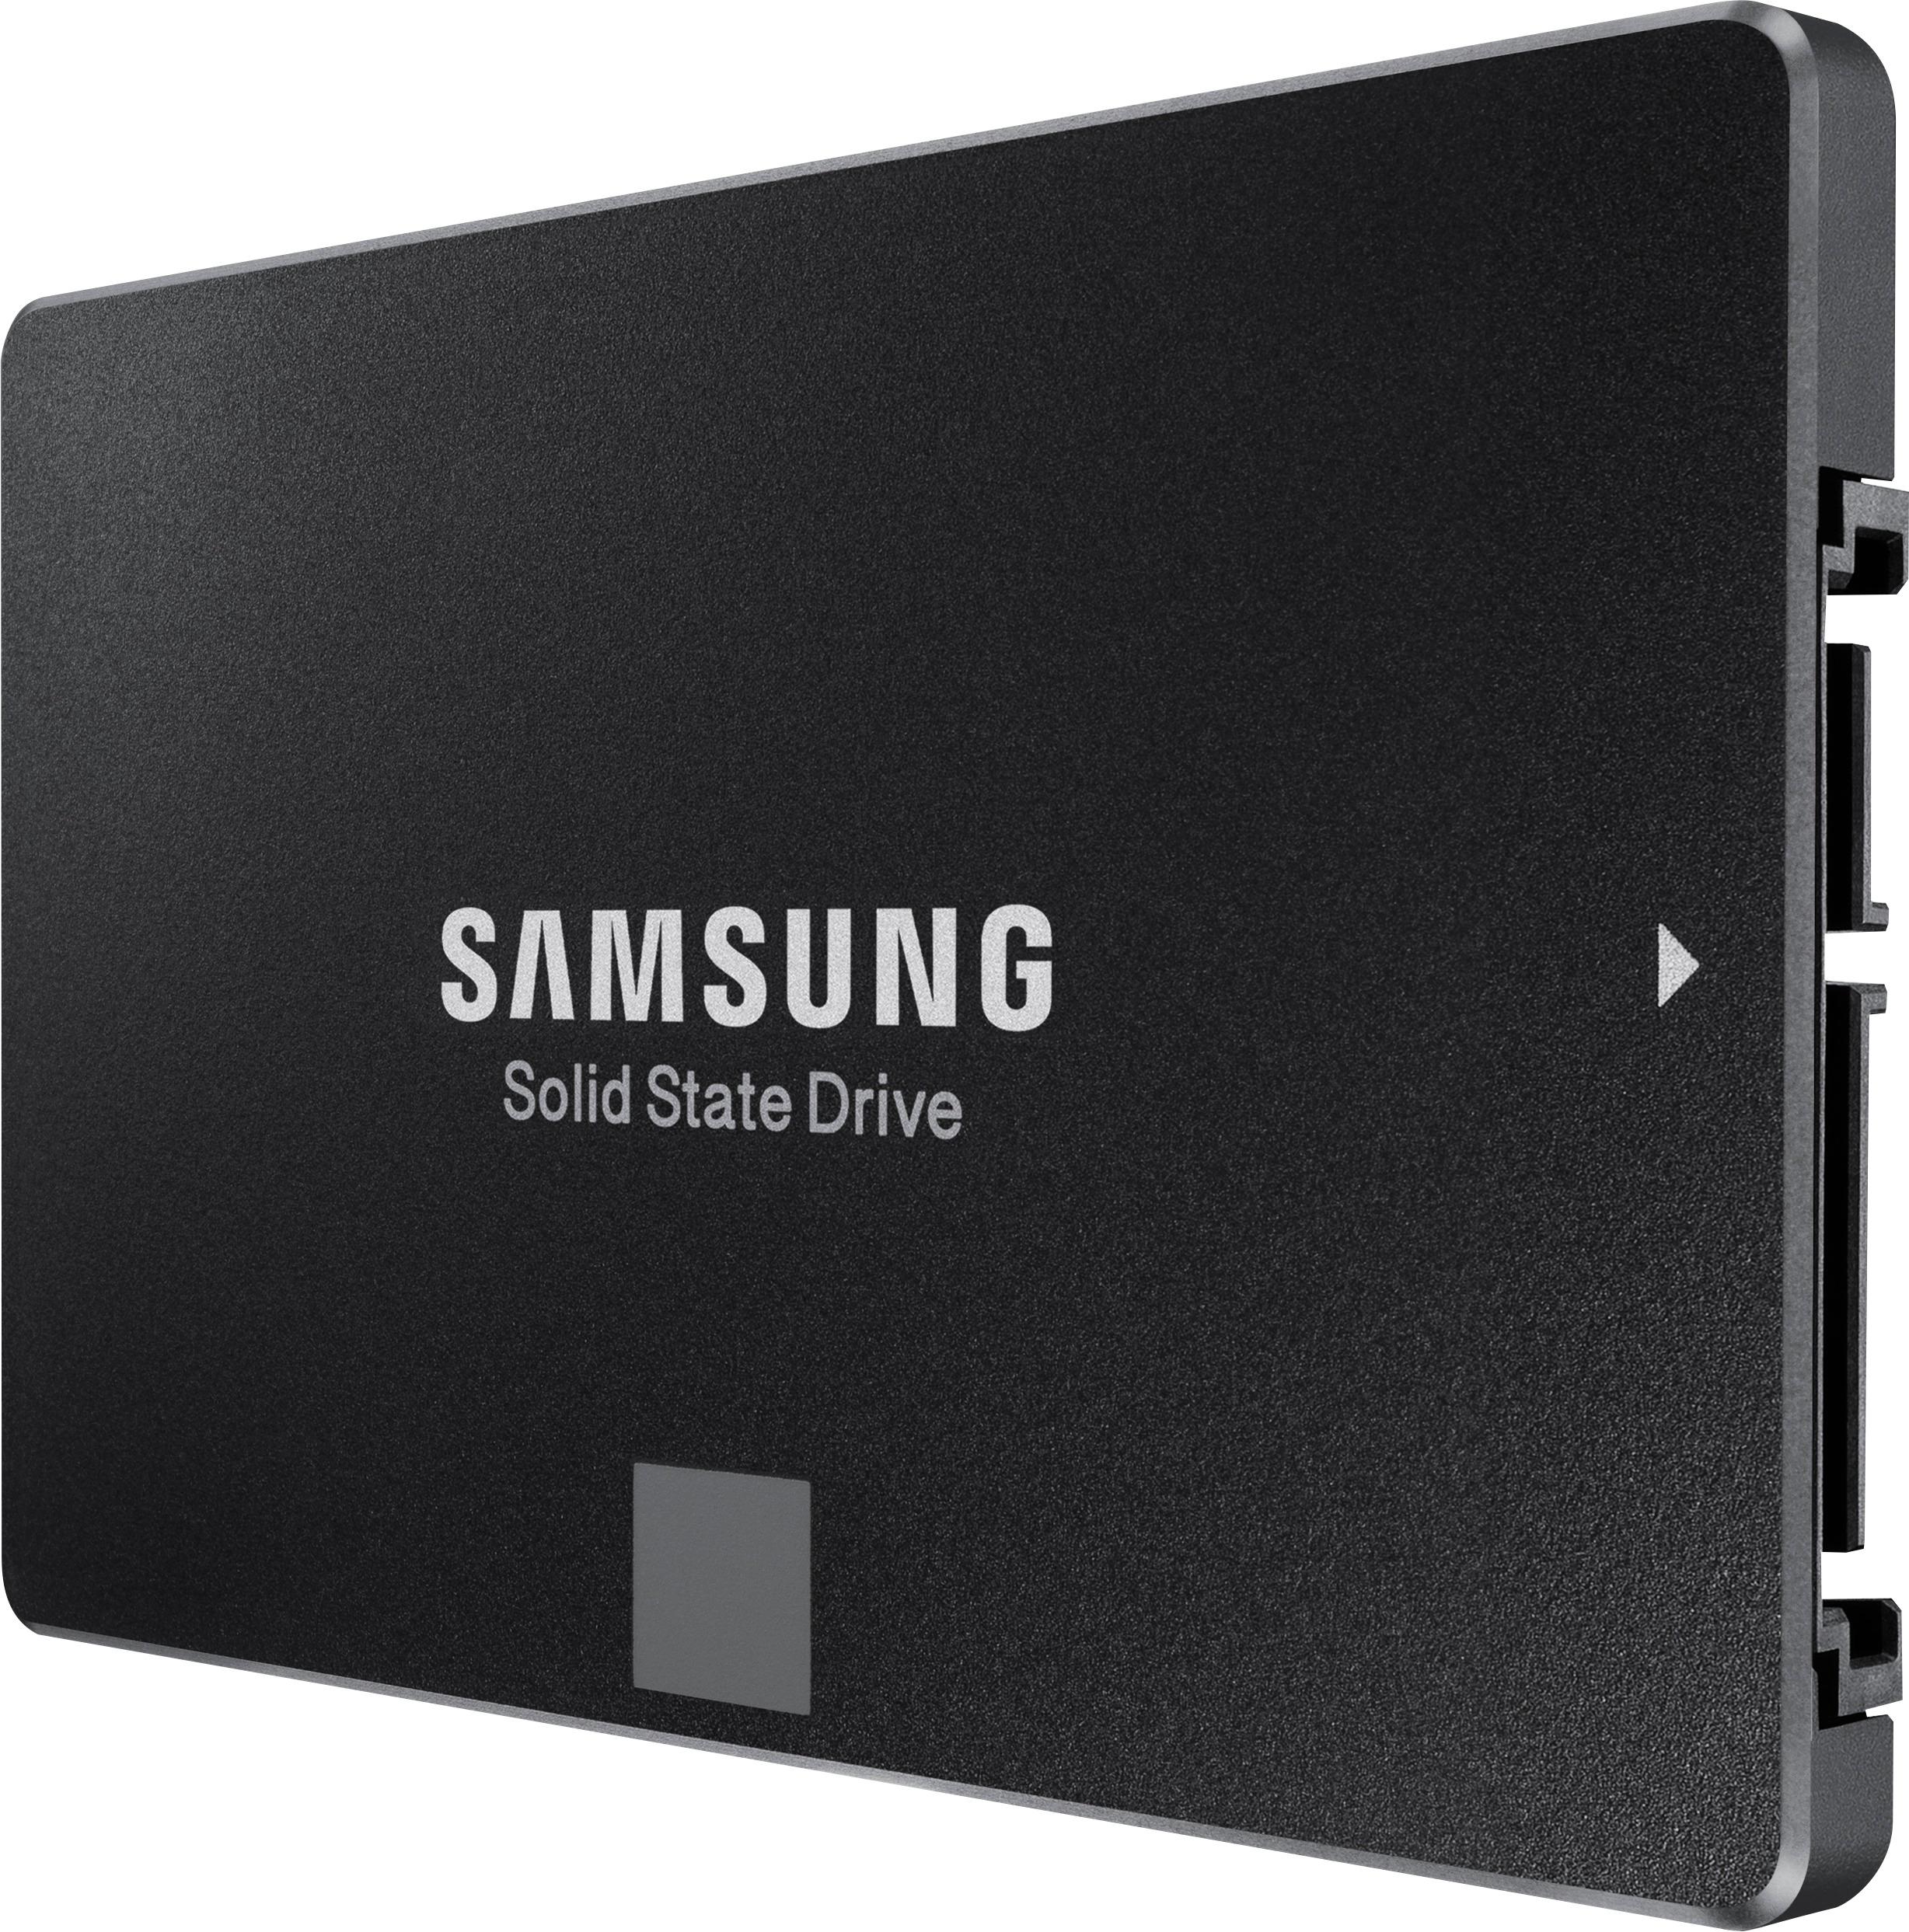 voldsom Blind Fabel Best Buy: Samsung 860 EVO 500GB SATA 2.5" Internal Solid State Drive  MZ-76E500B/AM